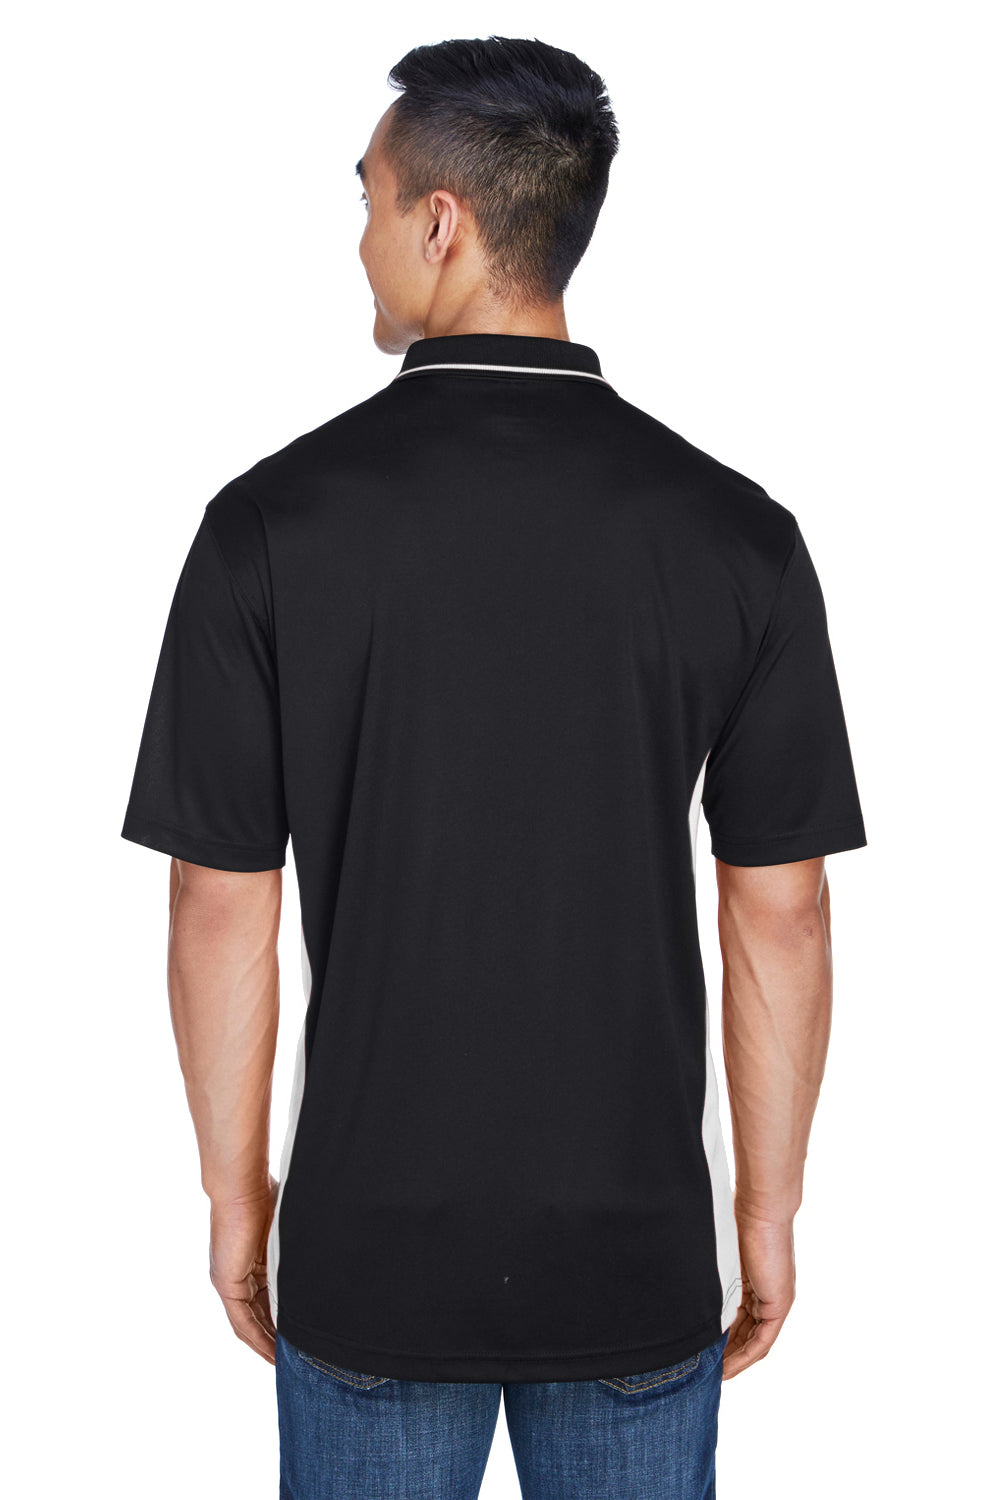 UltraClub 8406 Mens Cool & Dry Moisture Wicking Short Sleeve Polo Shirt Black/Stone Back